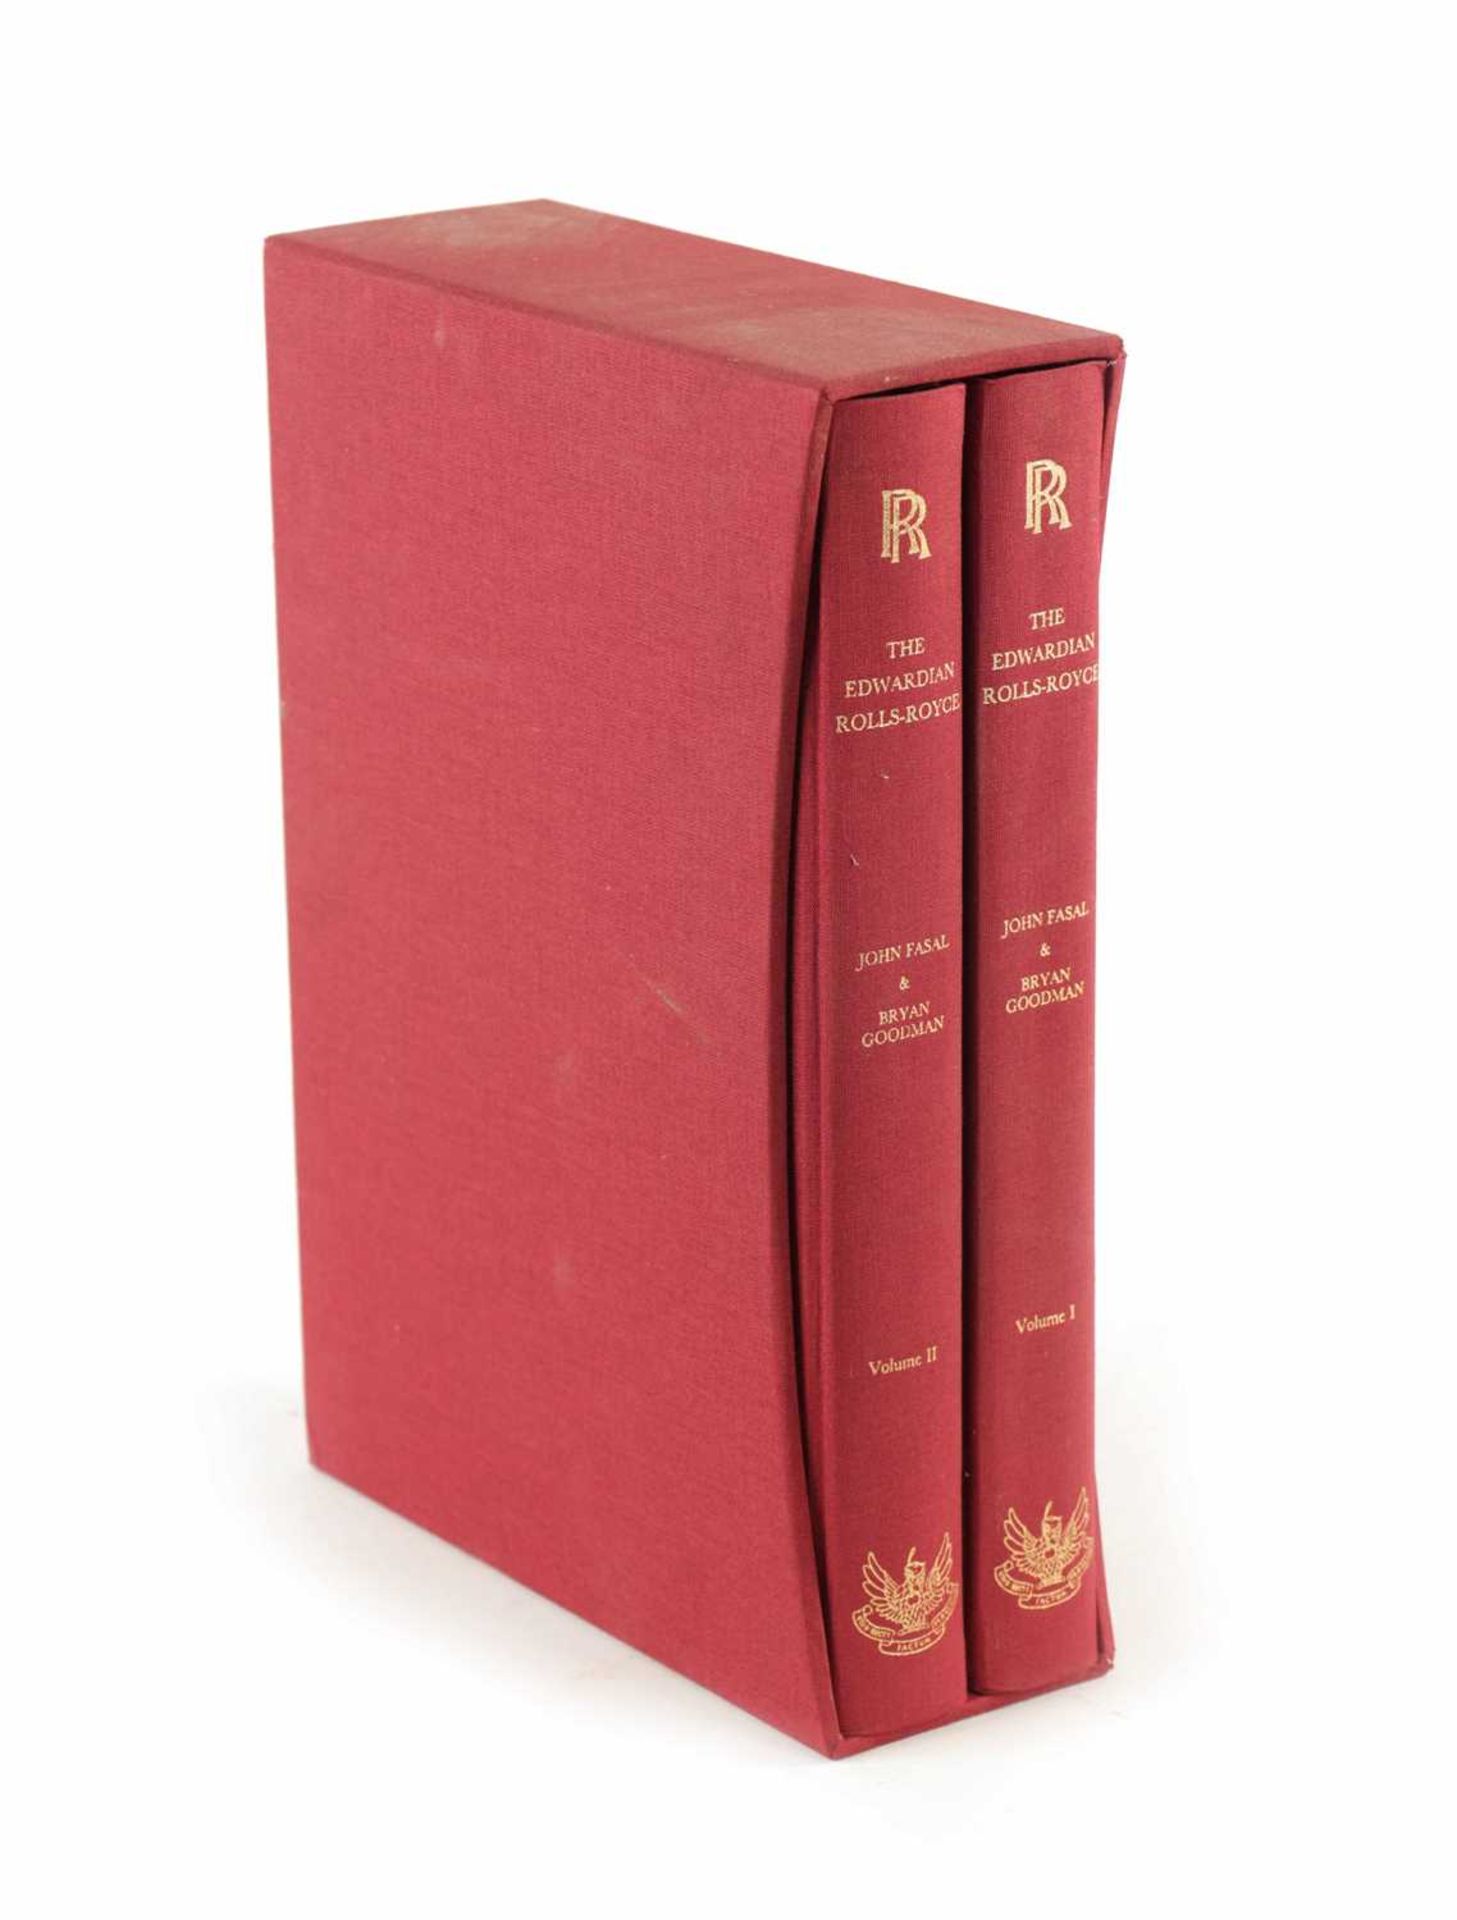 THE EDWARDIAN ROLLS-ROYCE. A PAIR OF HARDBACK BOOKS BY JOHN FASIL & BRYAN GOODMAN